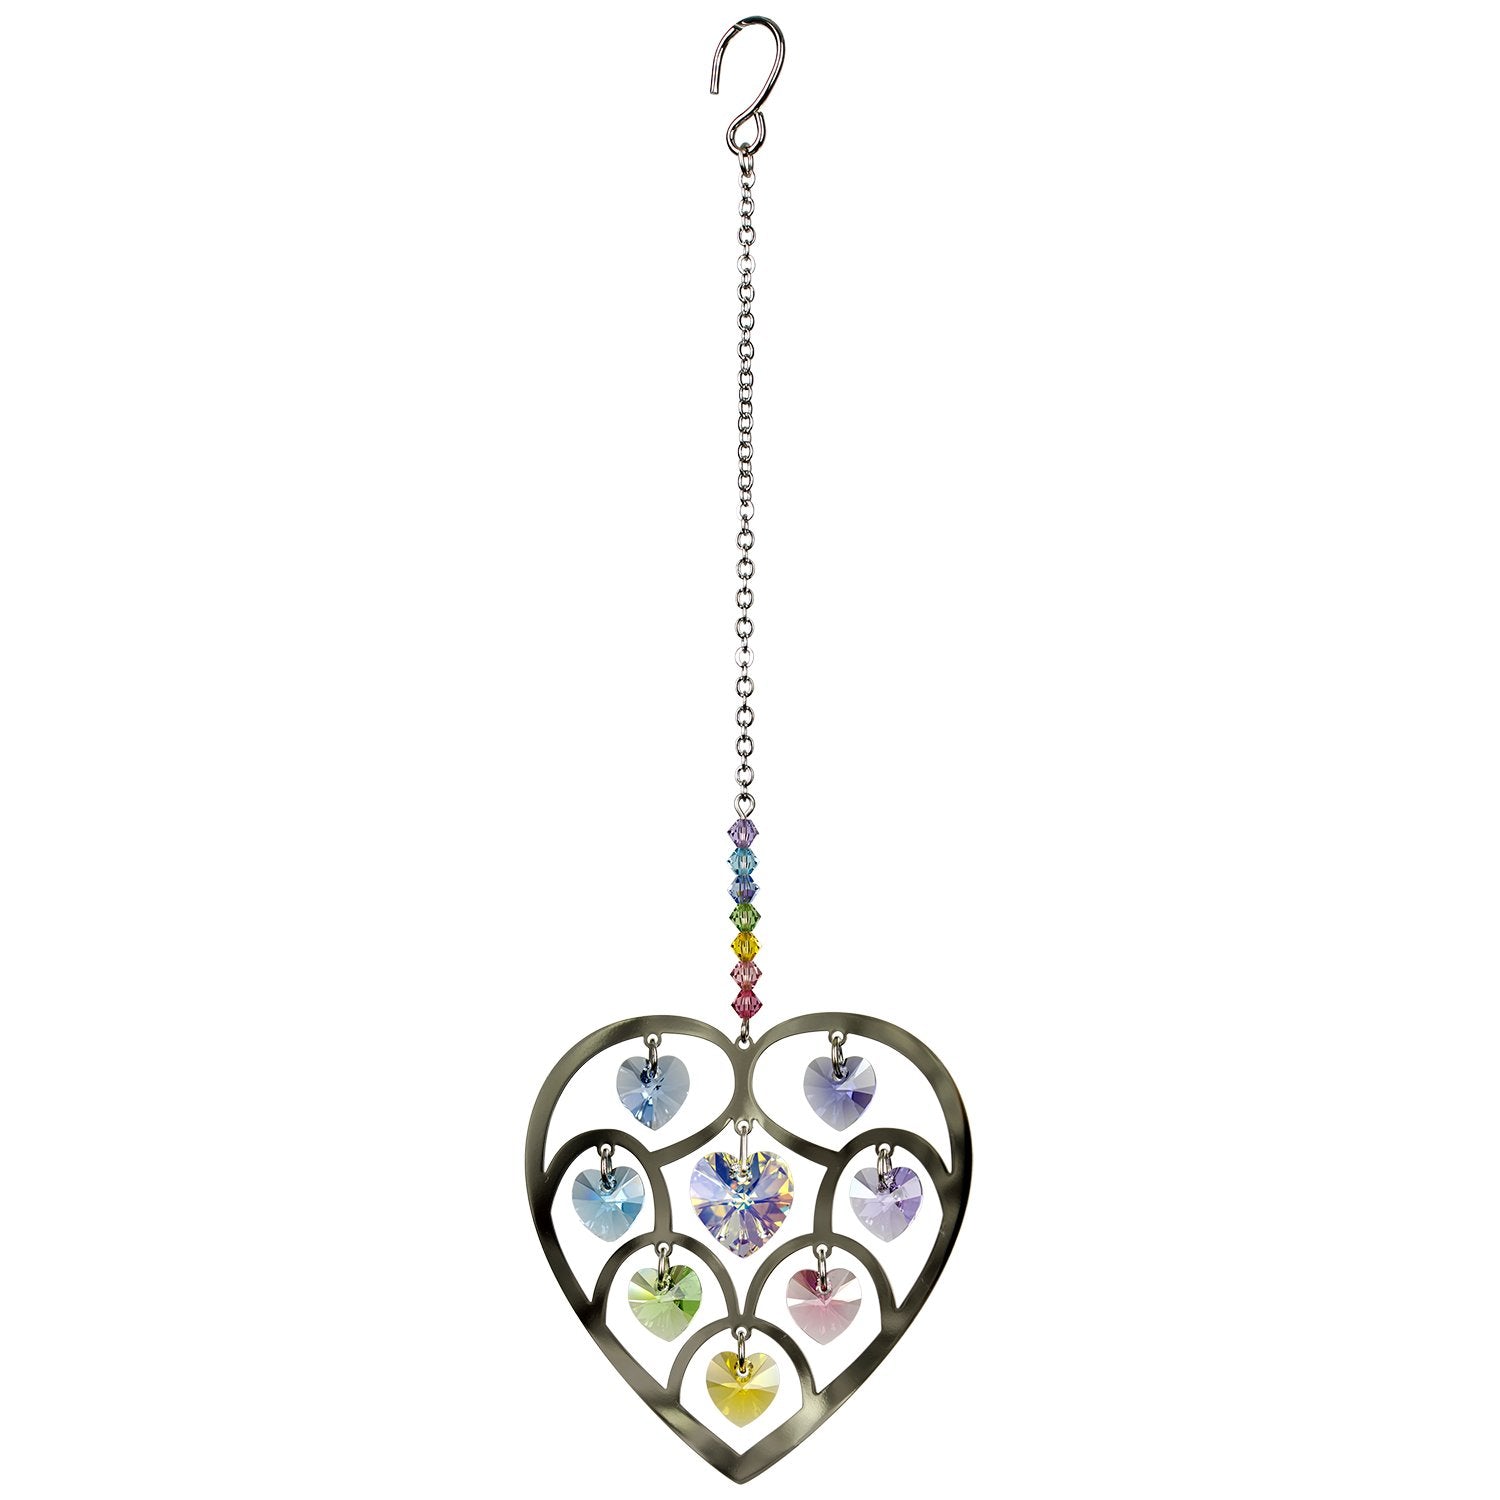 Heart of Hearts - Confetti full product image